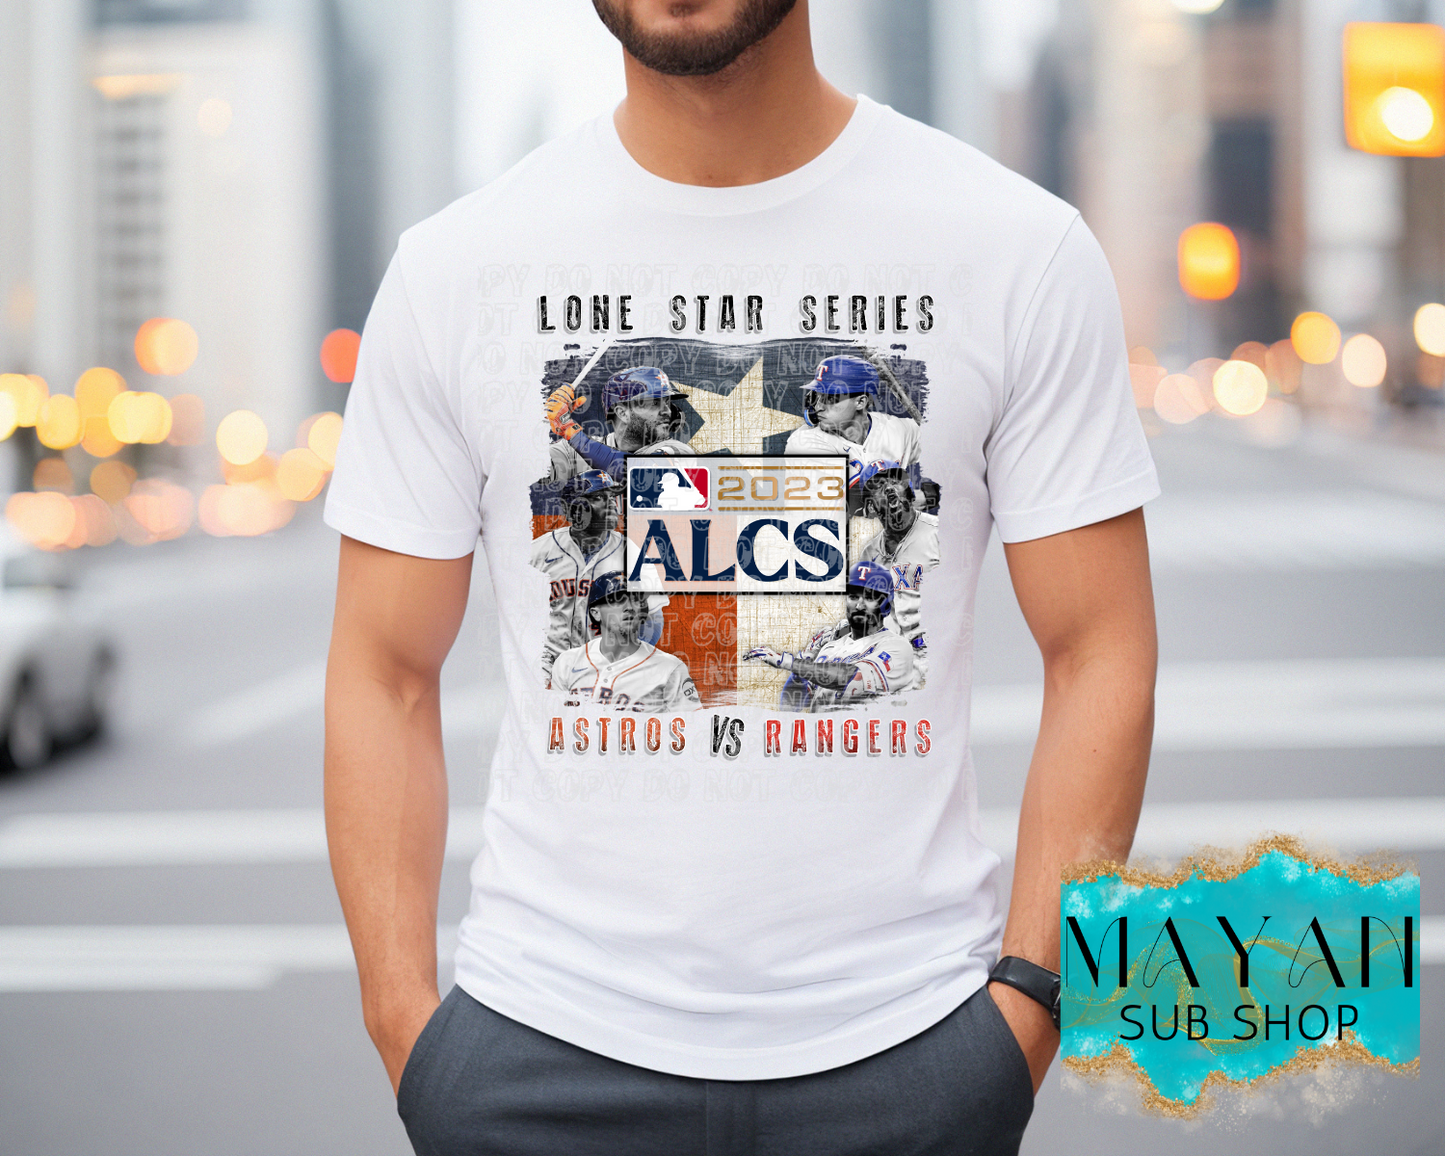 Lone Star Series Baseball shirt. -Mayan Sub Shop